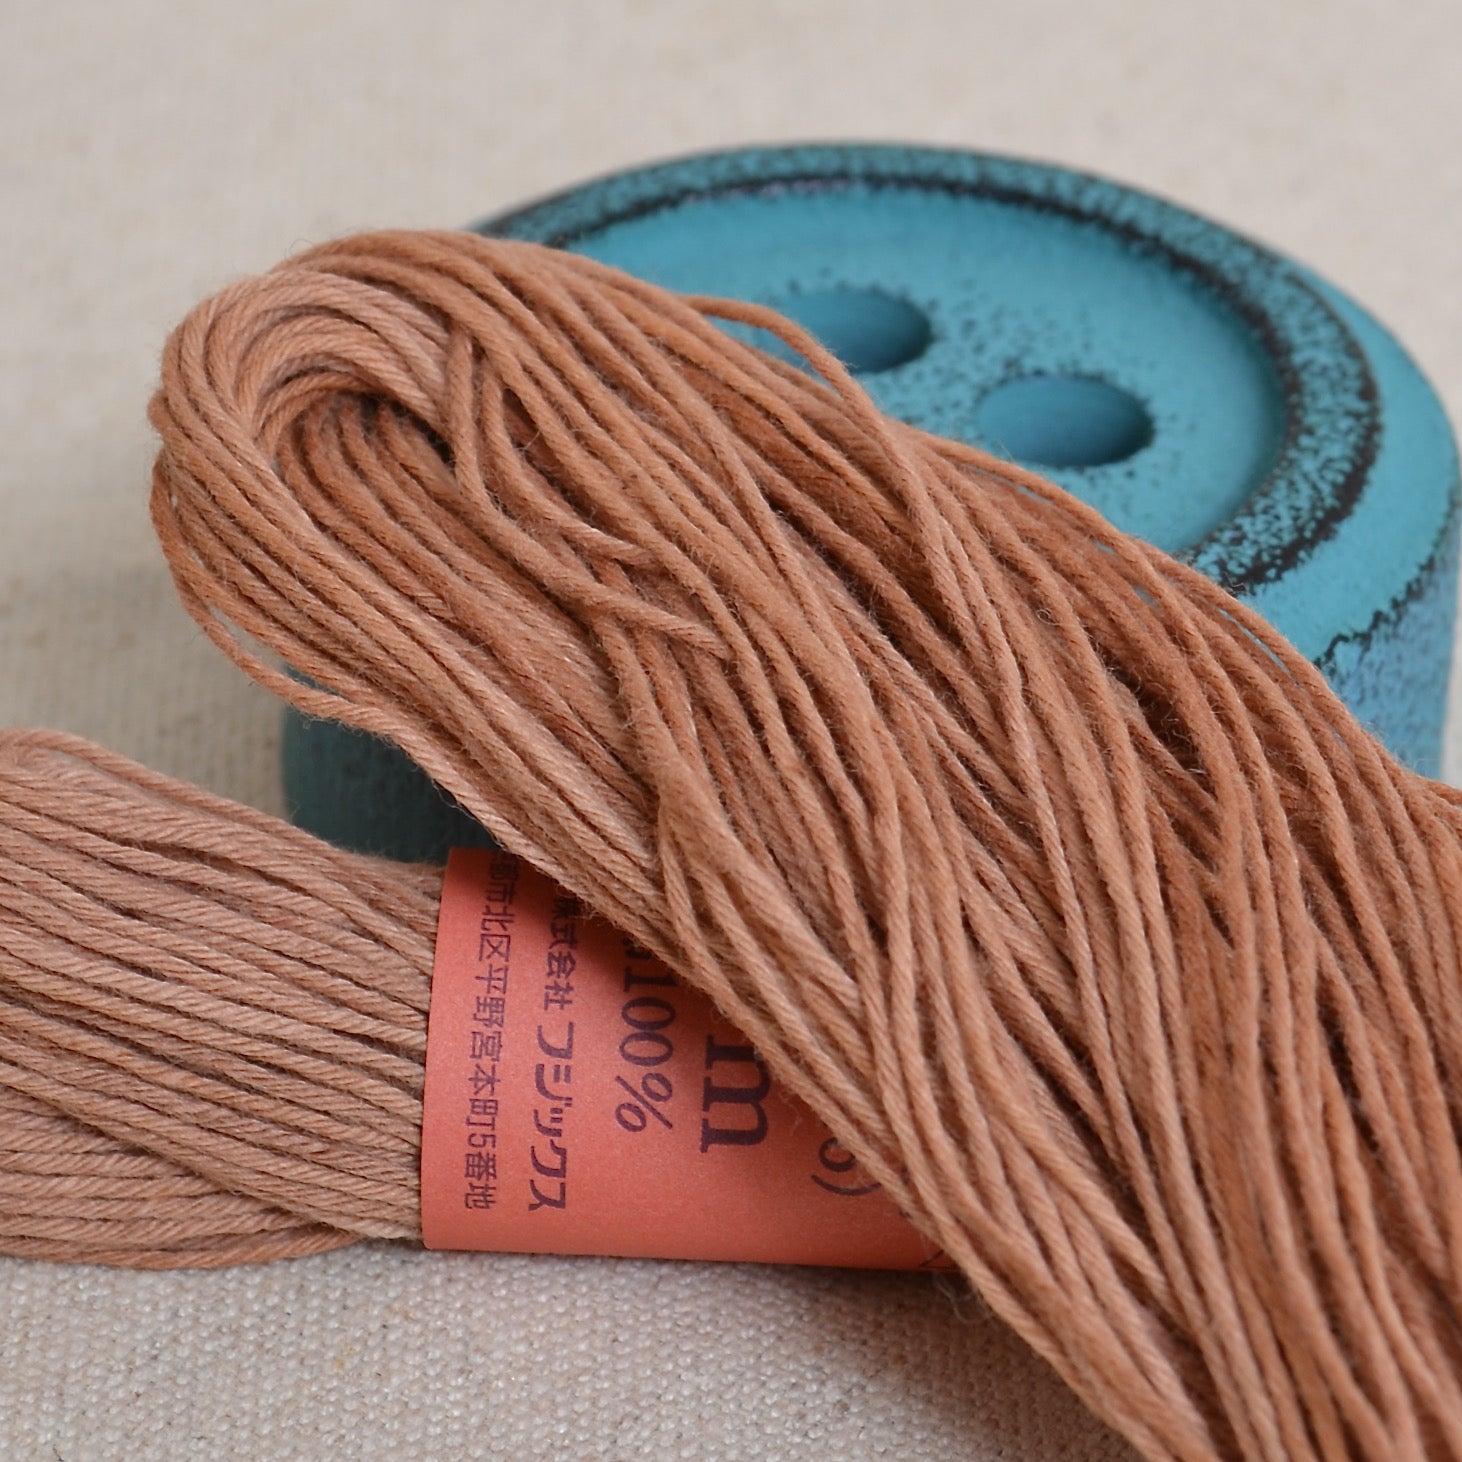 brick dust Fujix cotton thread, Persimmon Tannin dyed